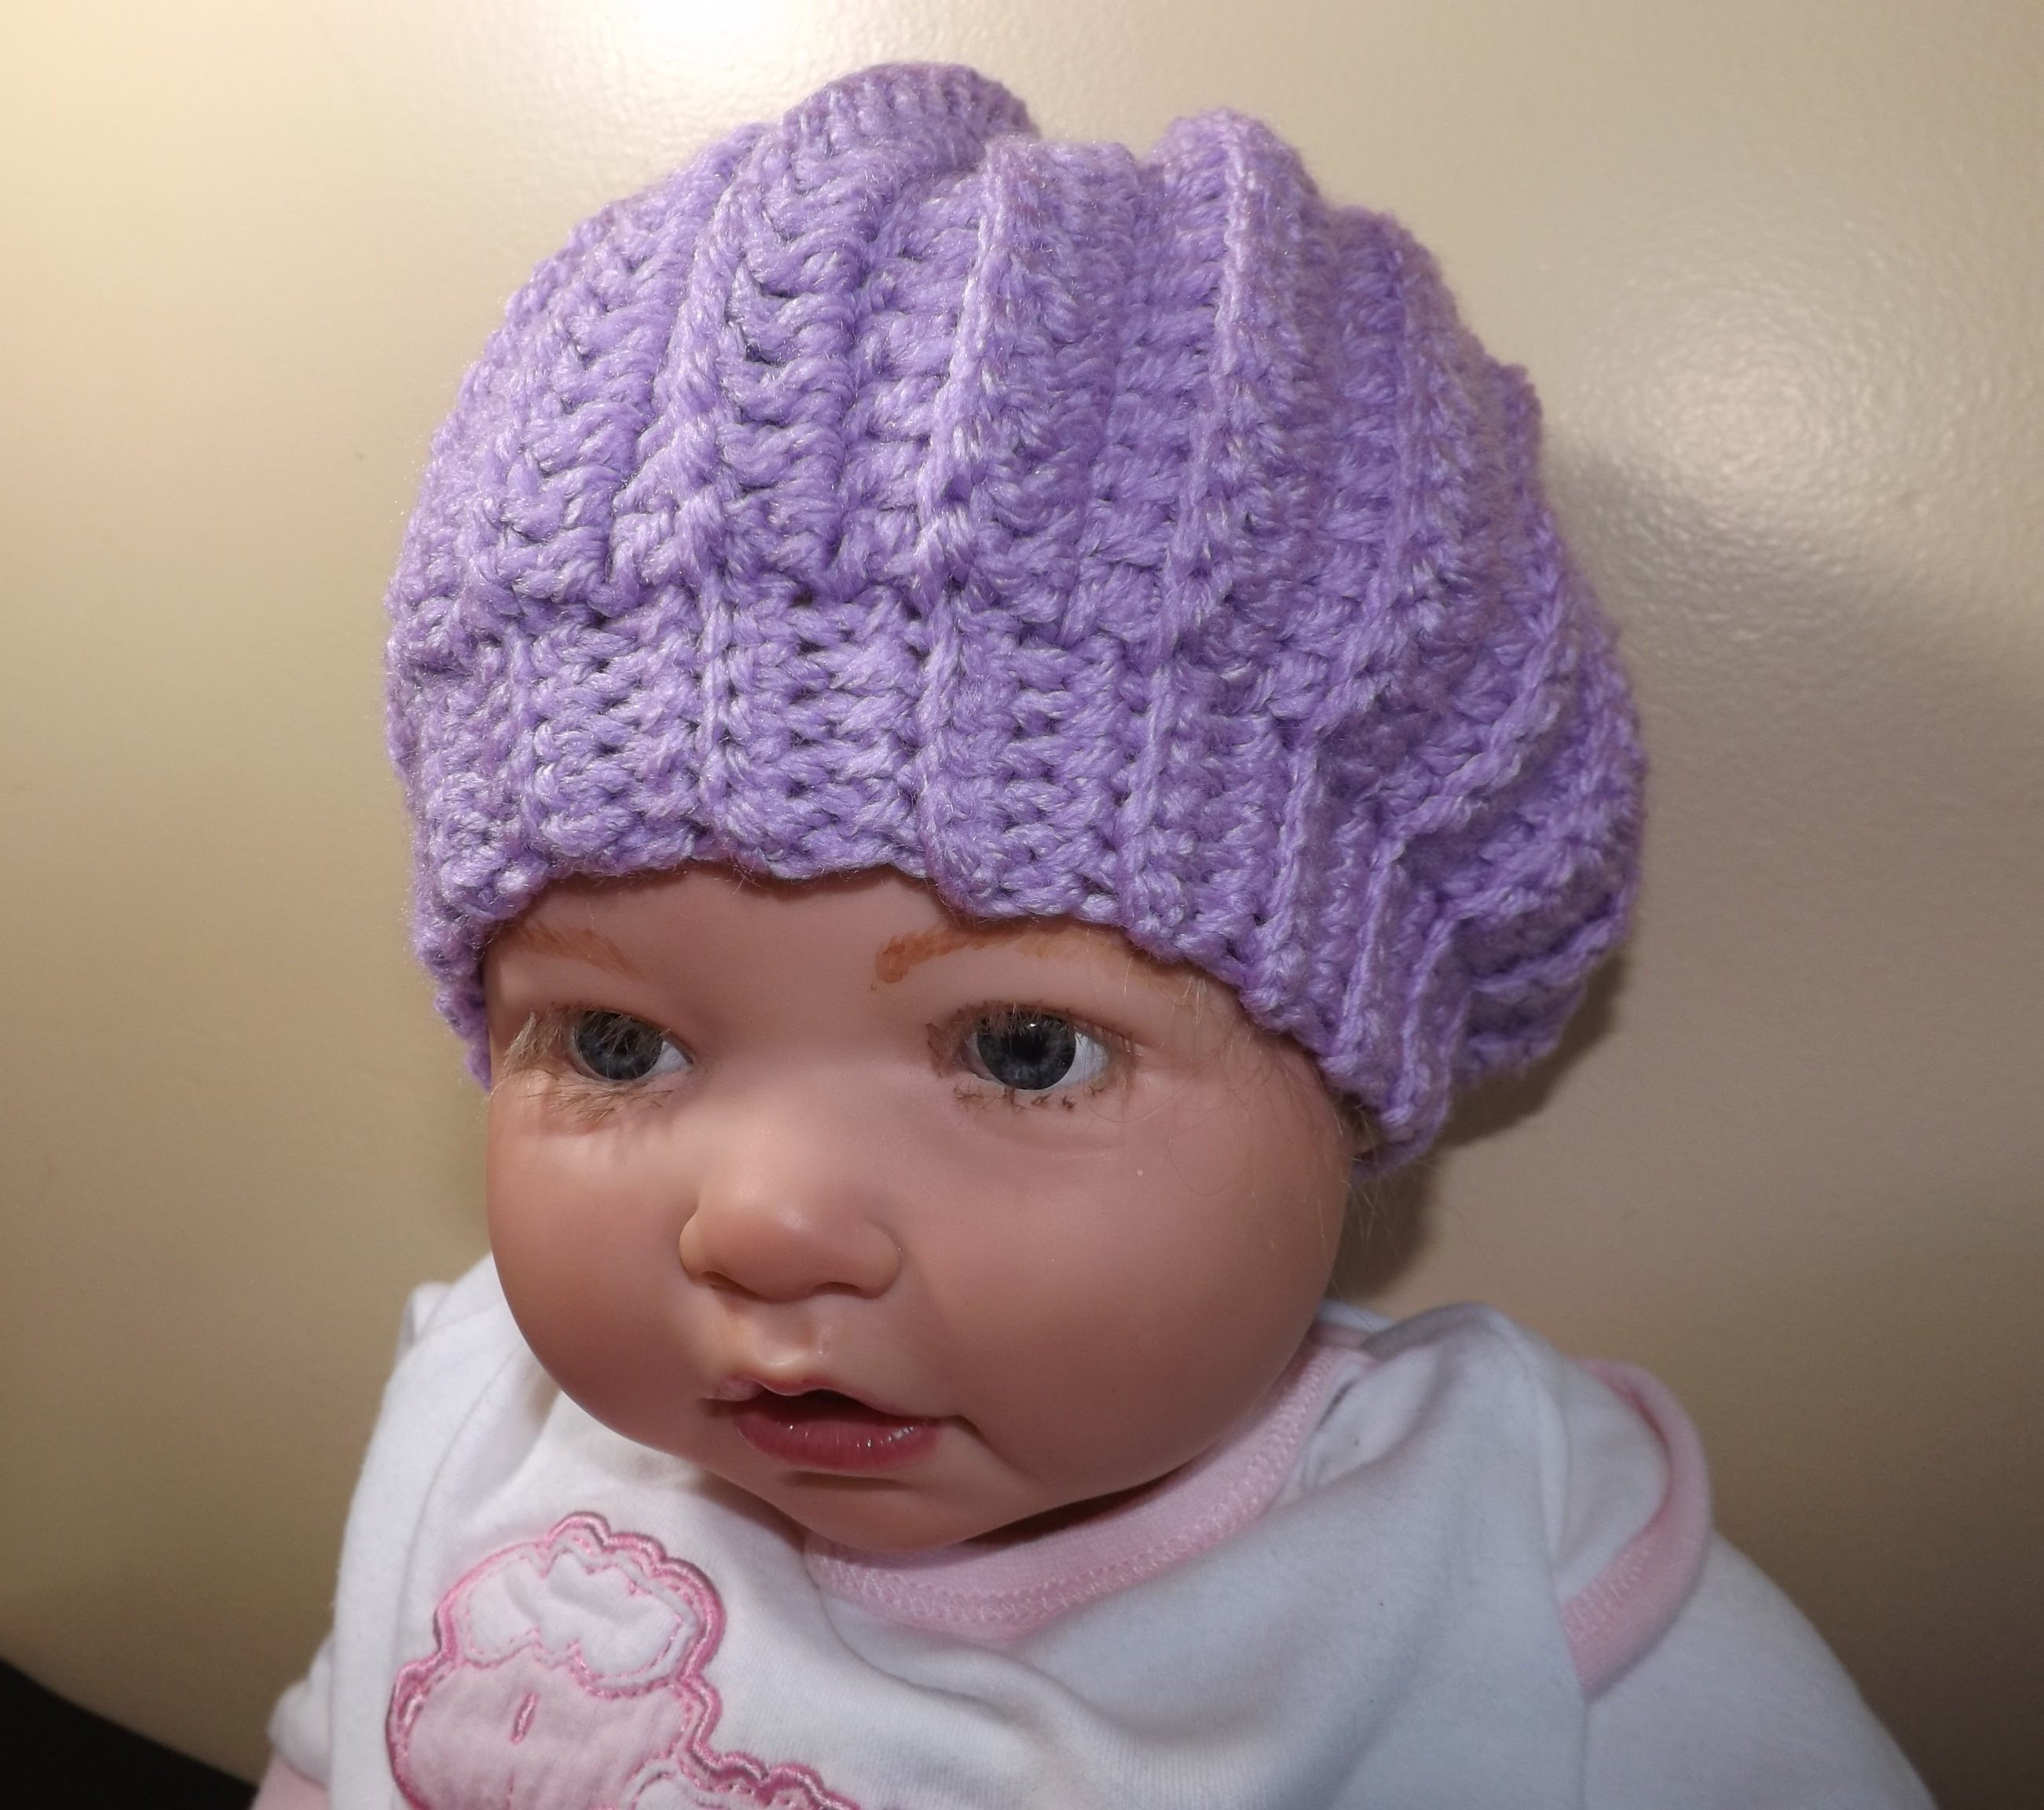 crochet baby hats crochet baby hat - with ruby stedman - youtube bwrxrau